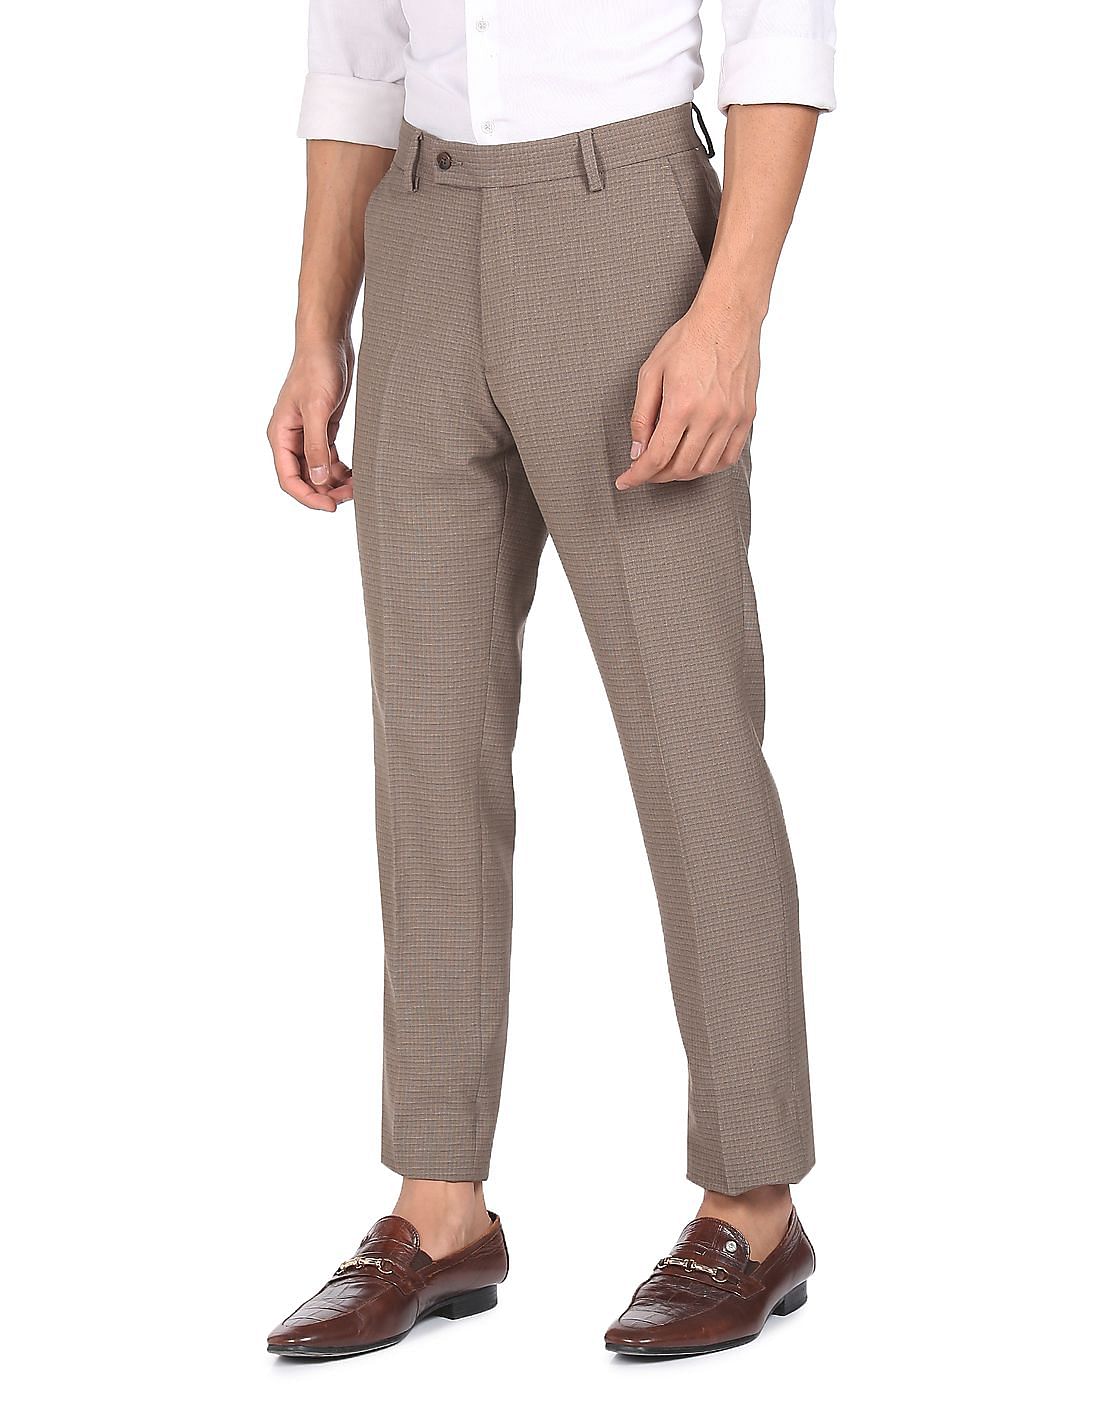 mens patterned suit trousers